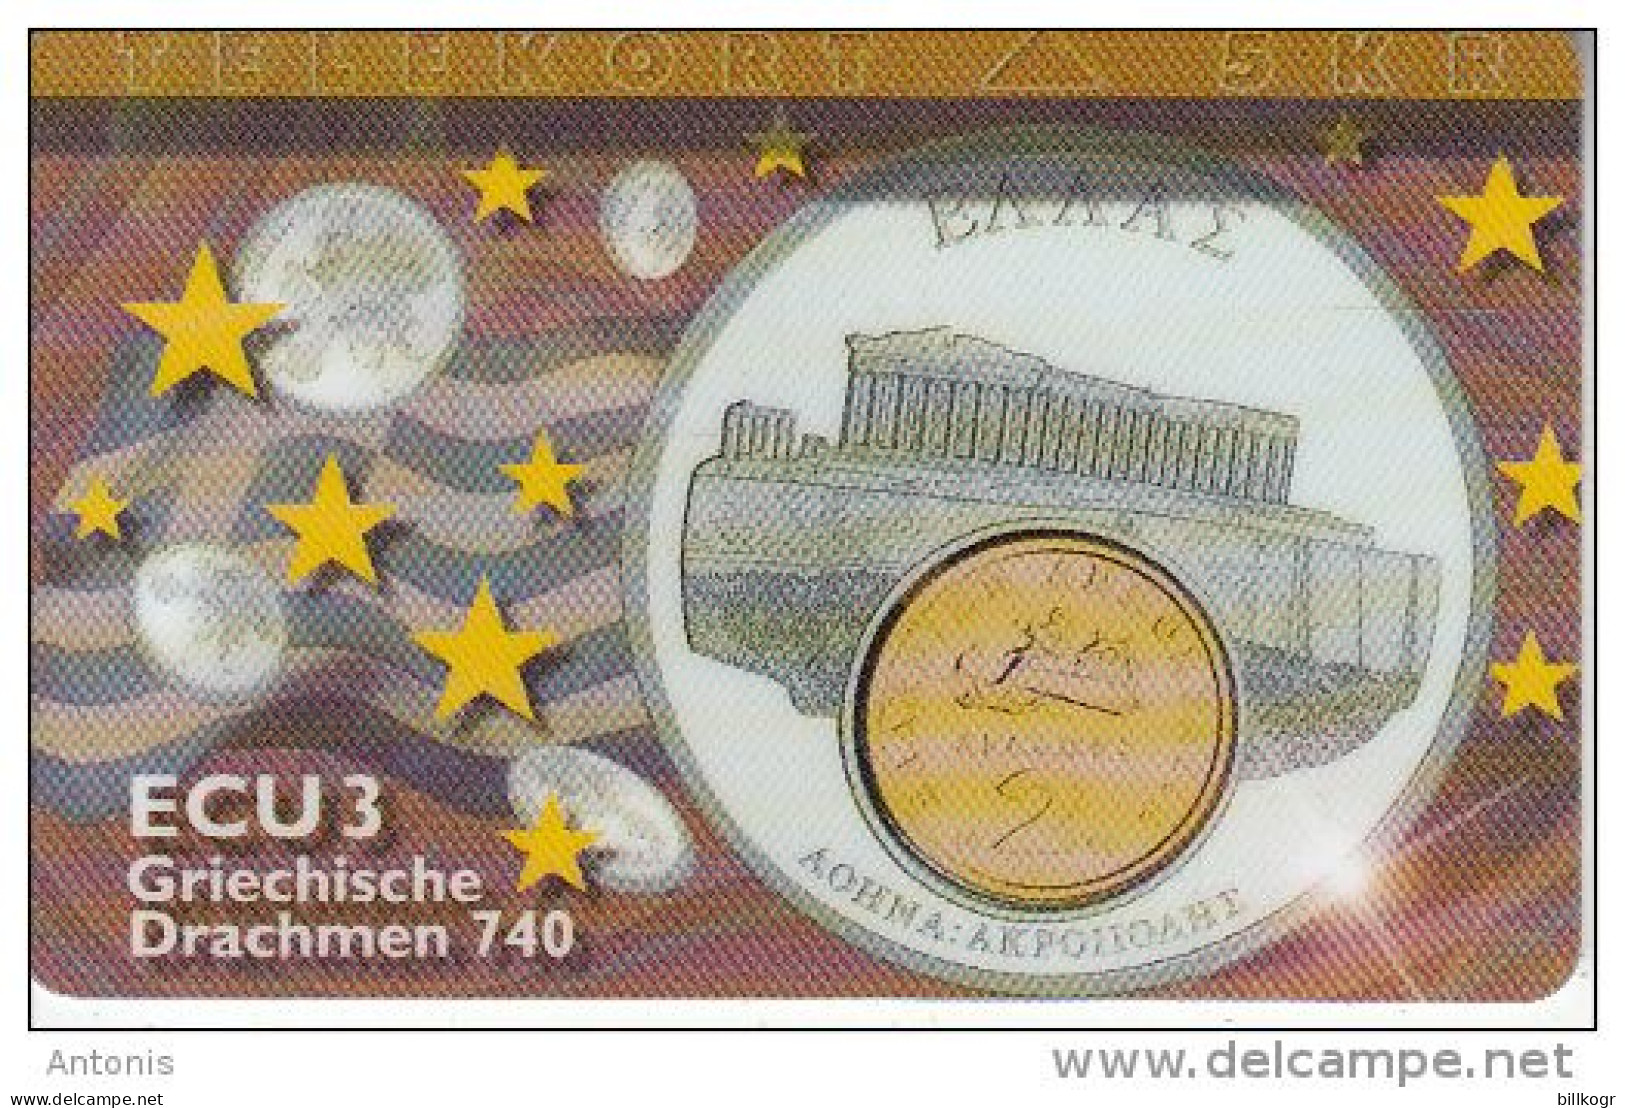 DENMARK - Athens/Acropolis, 2 GRD Coin, ECU Series/Greece, Tirage 700, 04/97, Mint - Denemarken